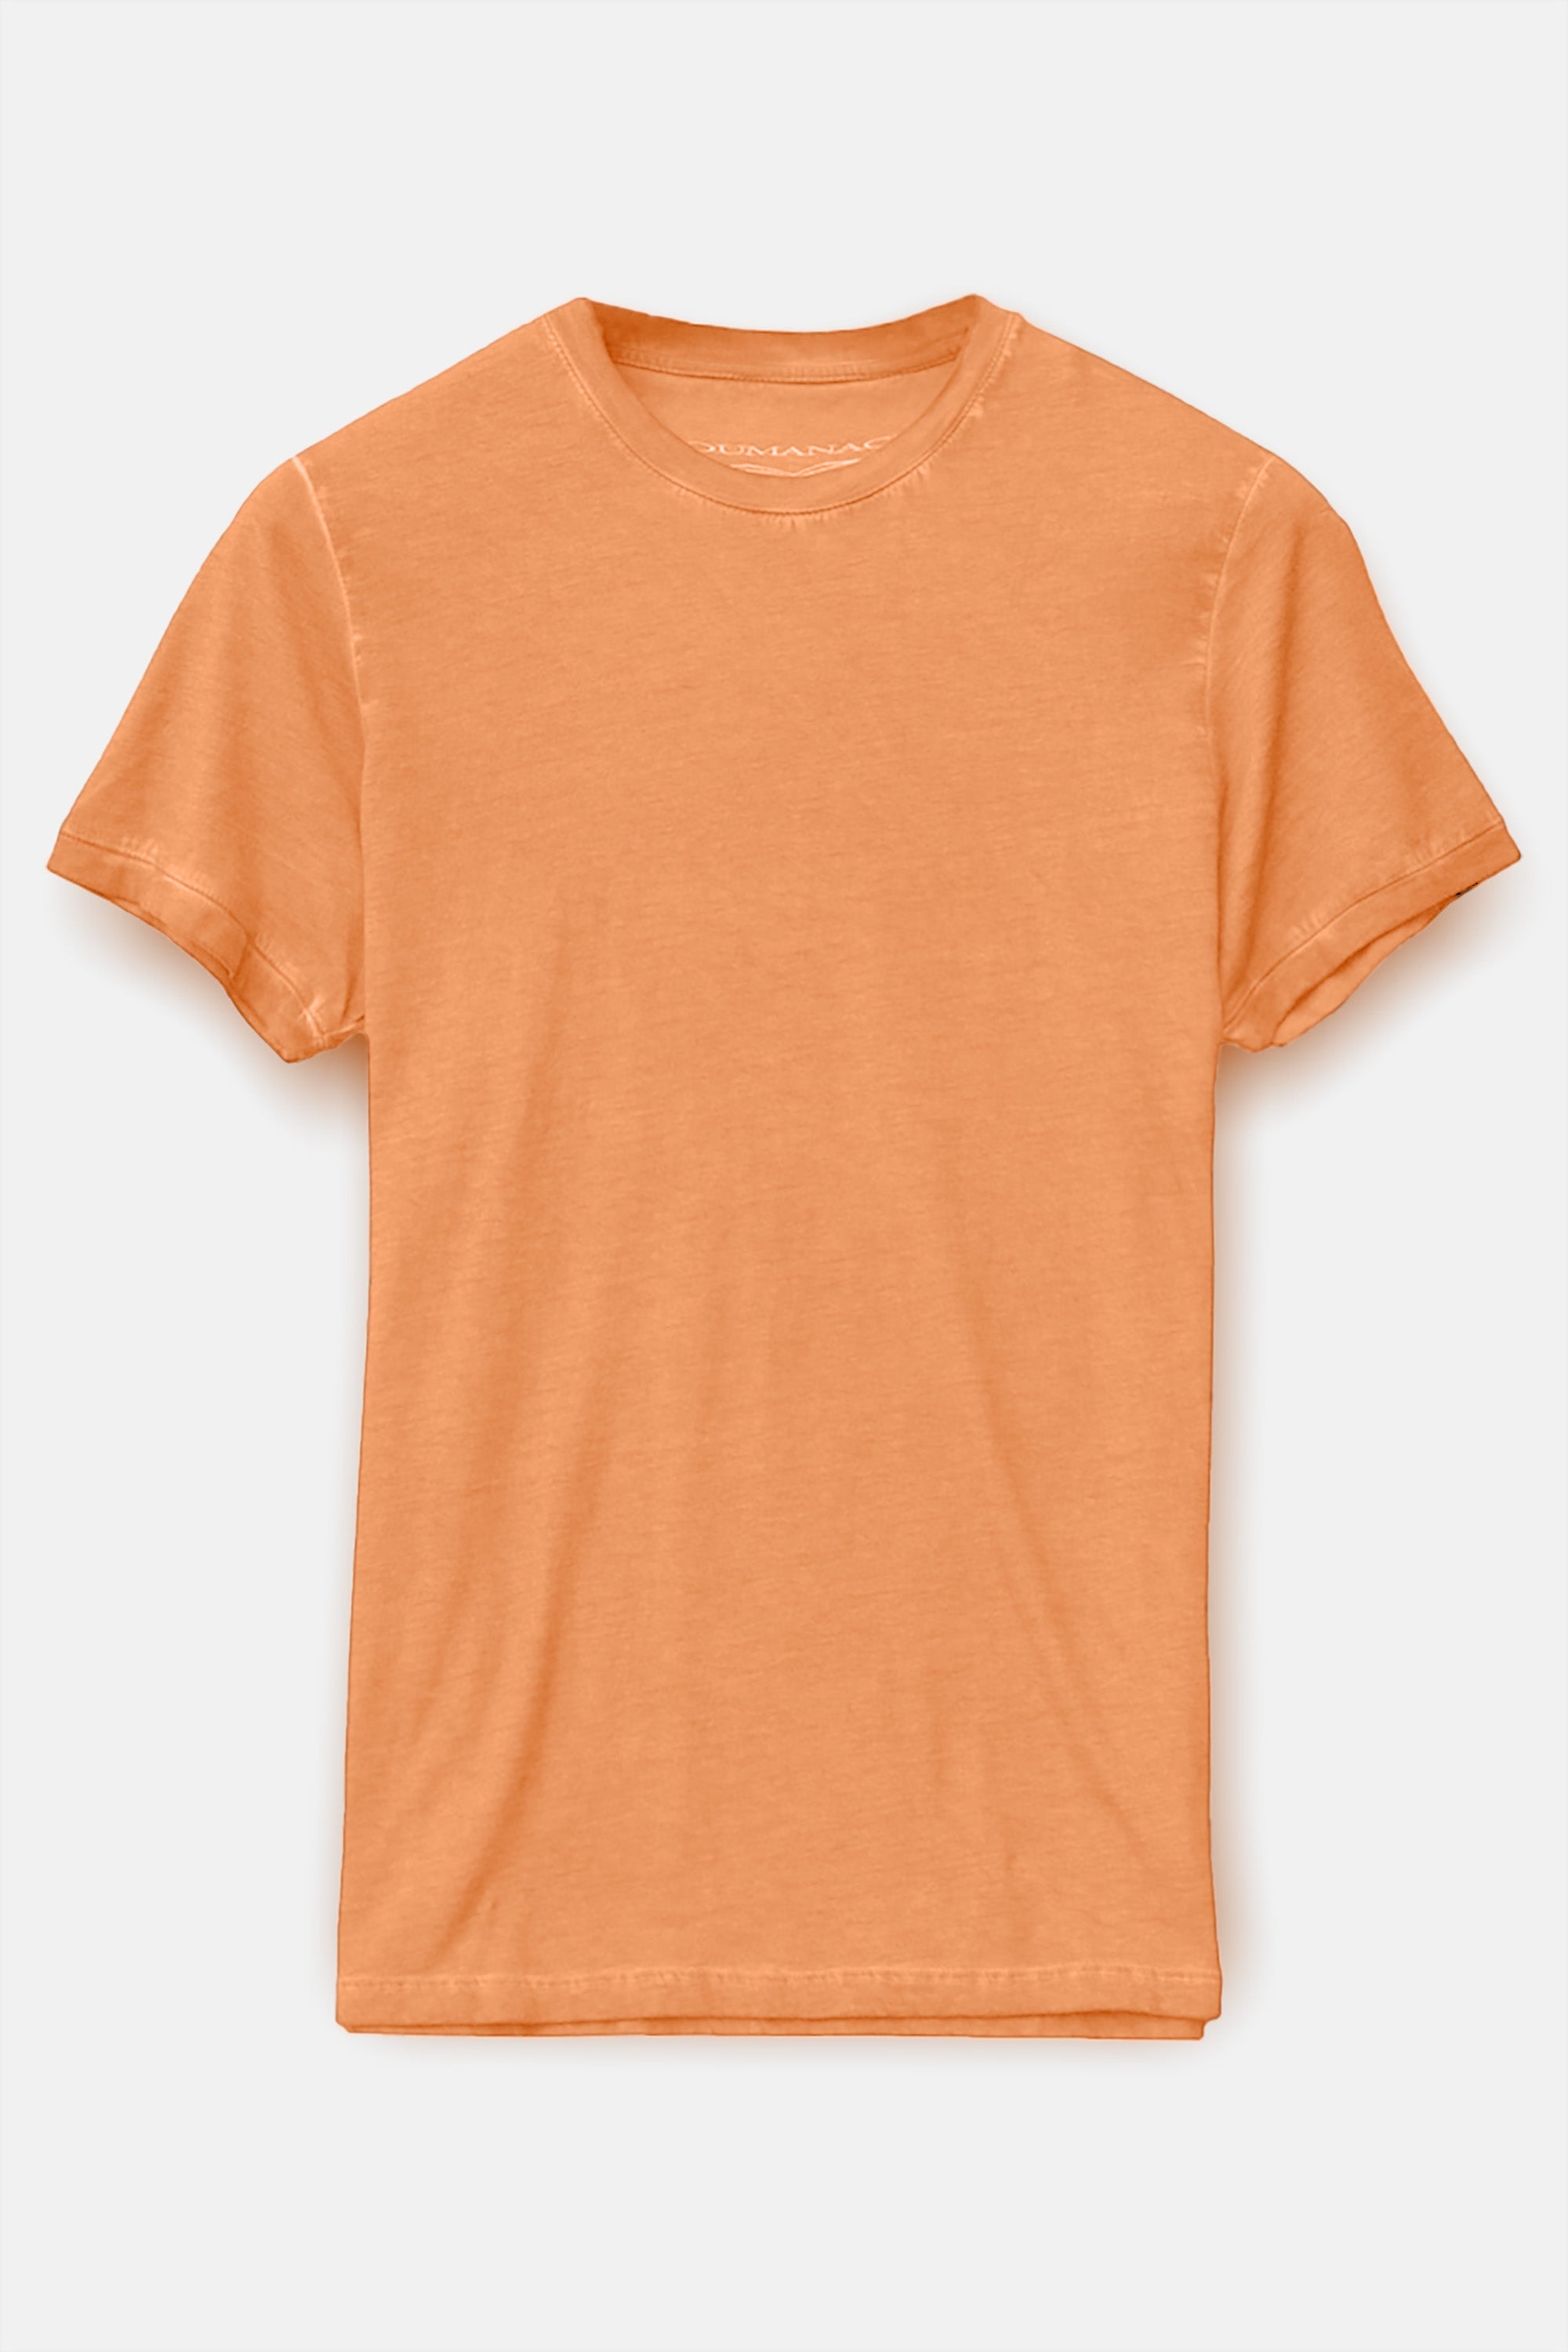 Smart Casual Cotton T-Shirt - Sundance